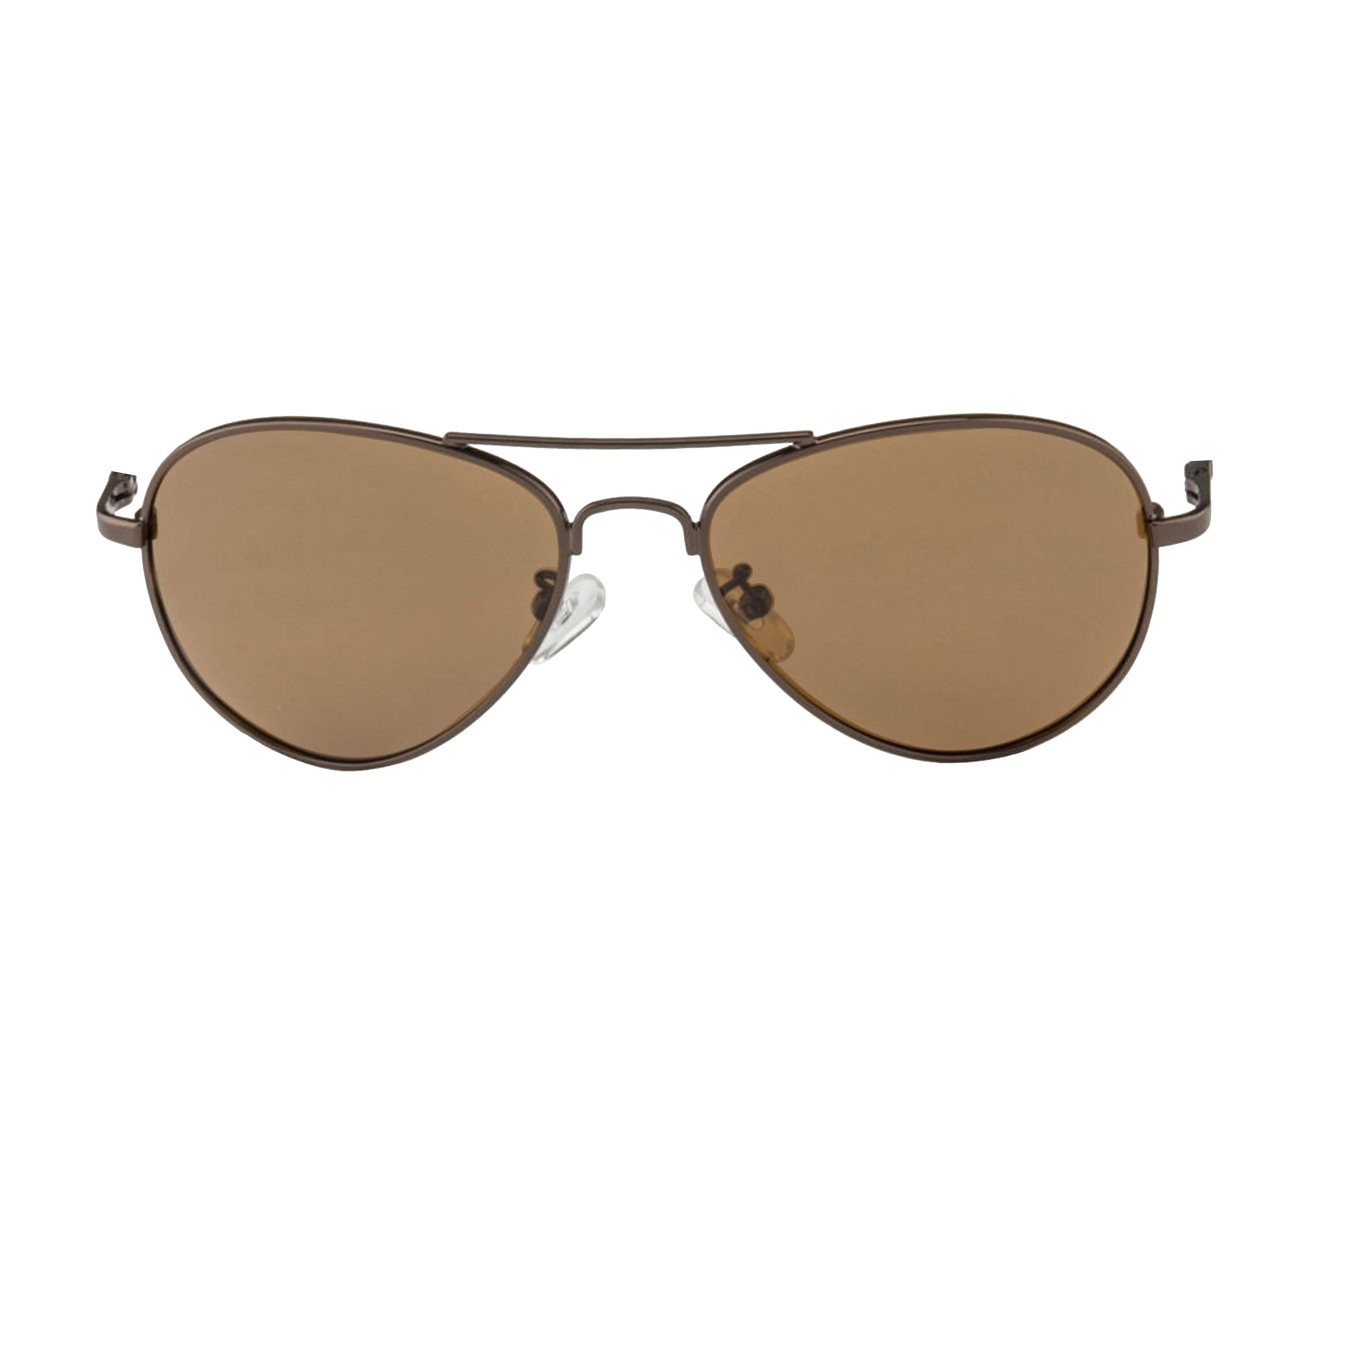 Images Armani Sunglasses Aviator Eyewear PNG Free Photo Clipart